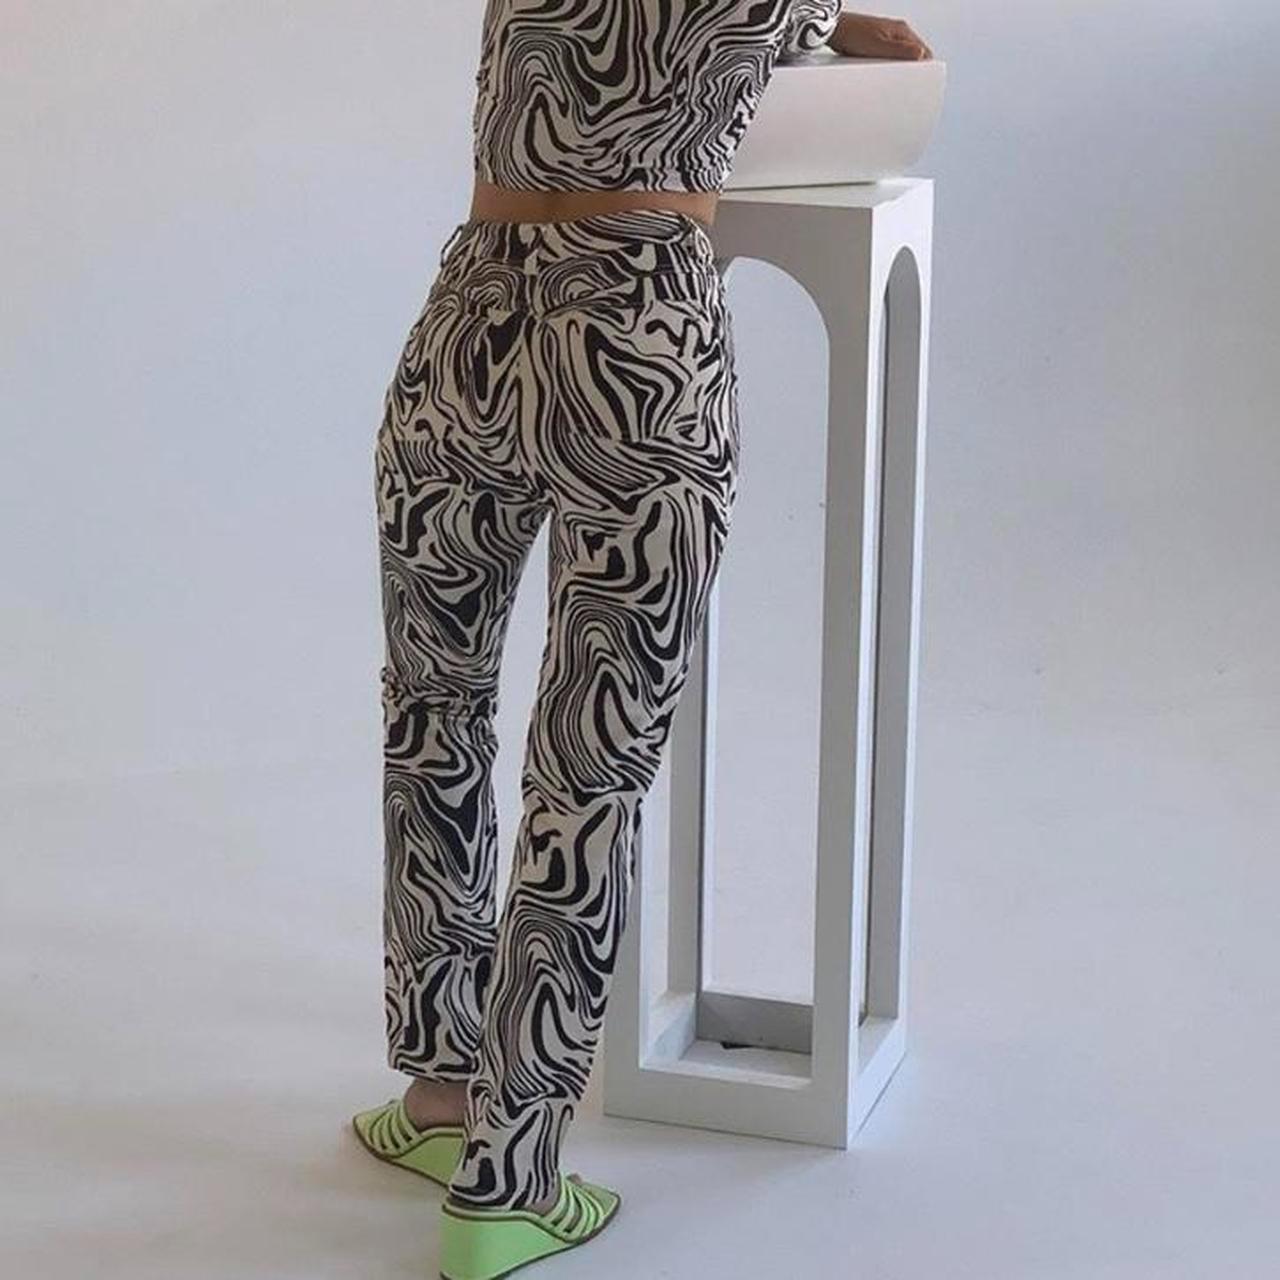 Paloma Wool - Kelly Pants, Size 36 / S, Trippy Zebra...